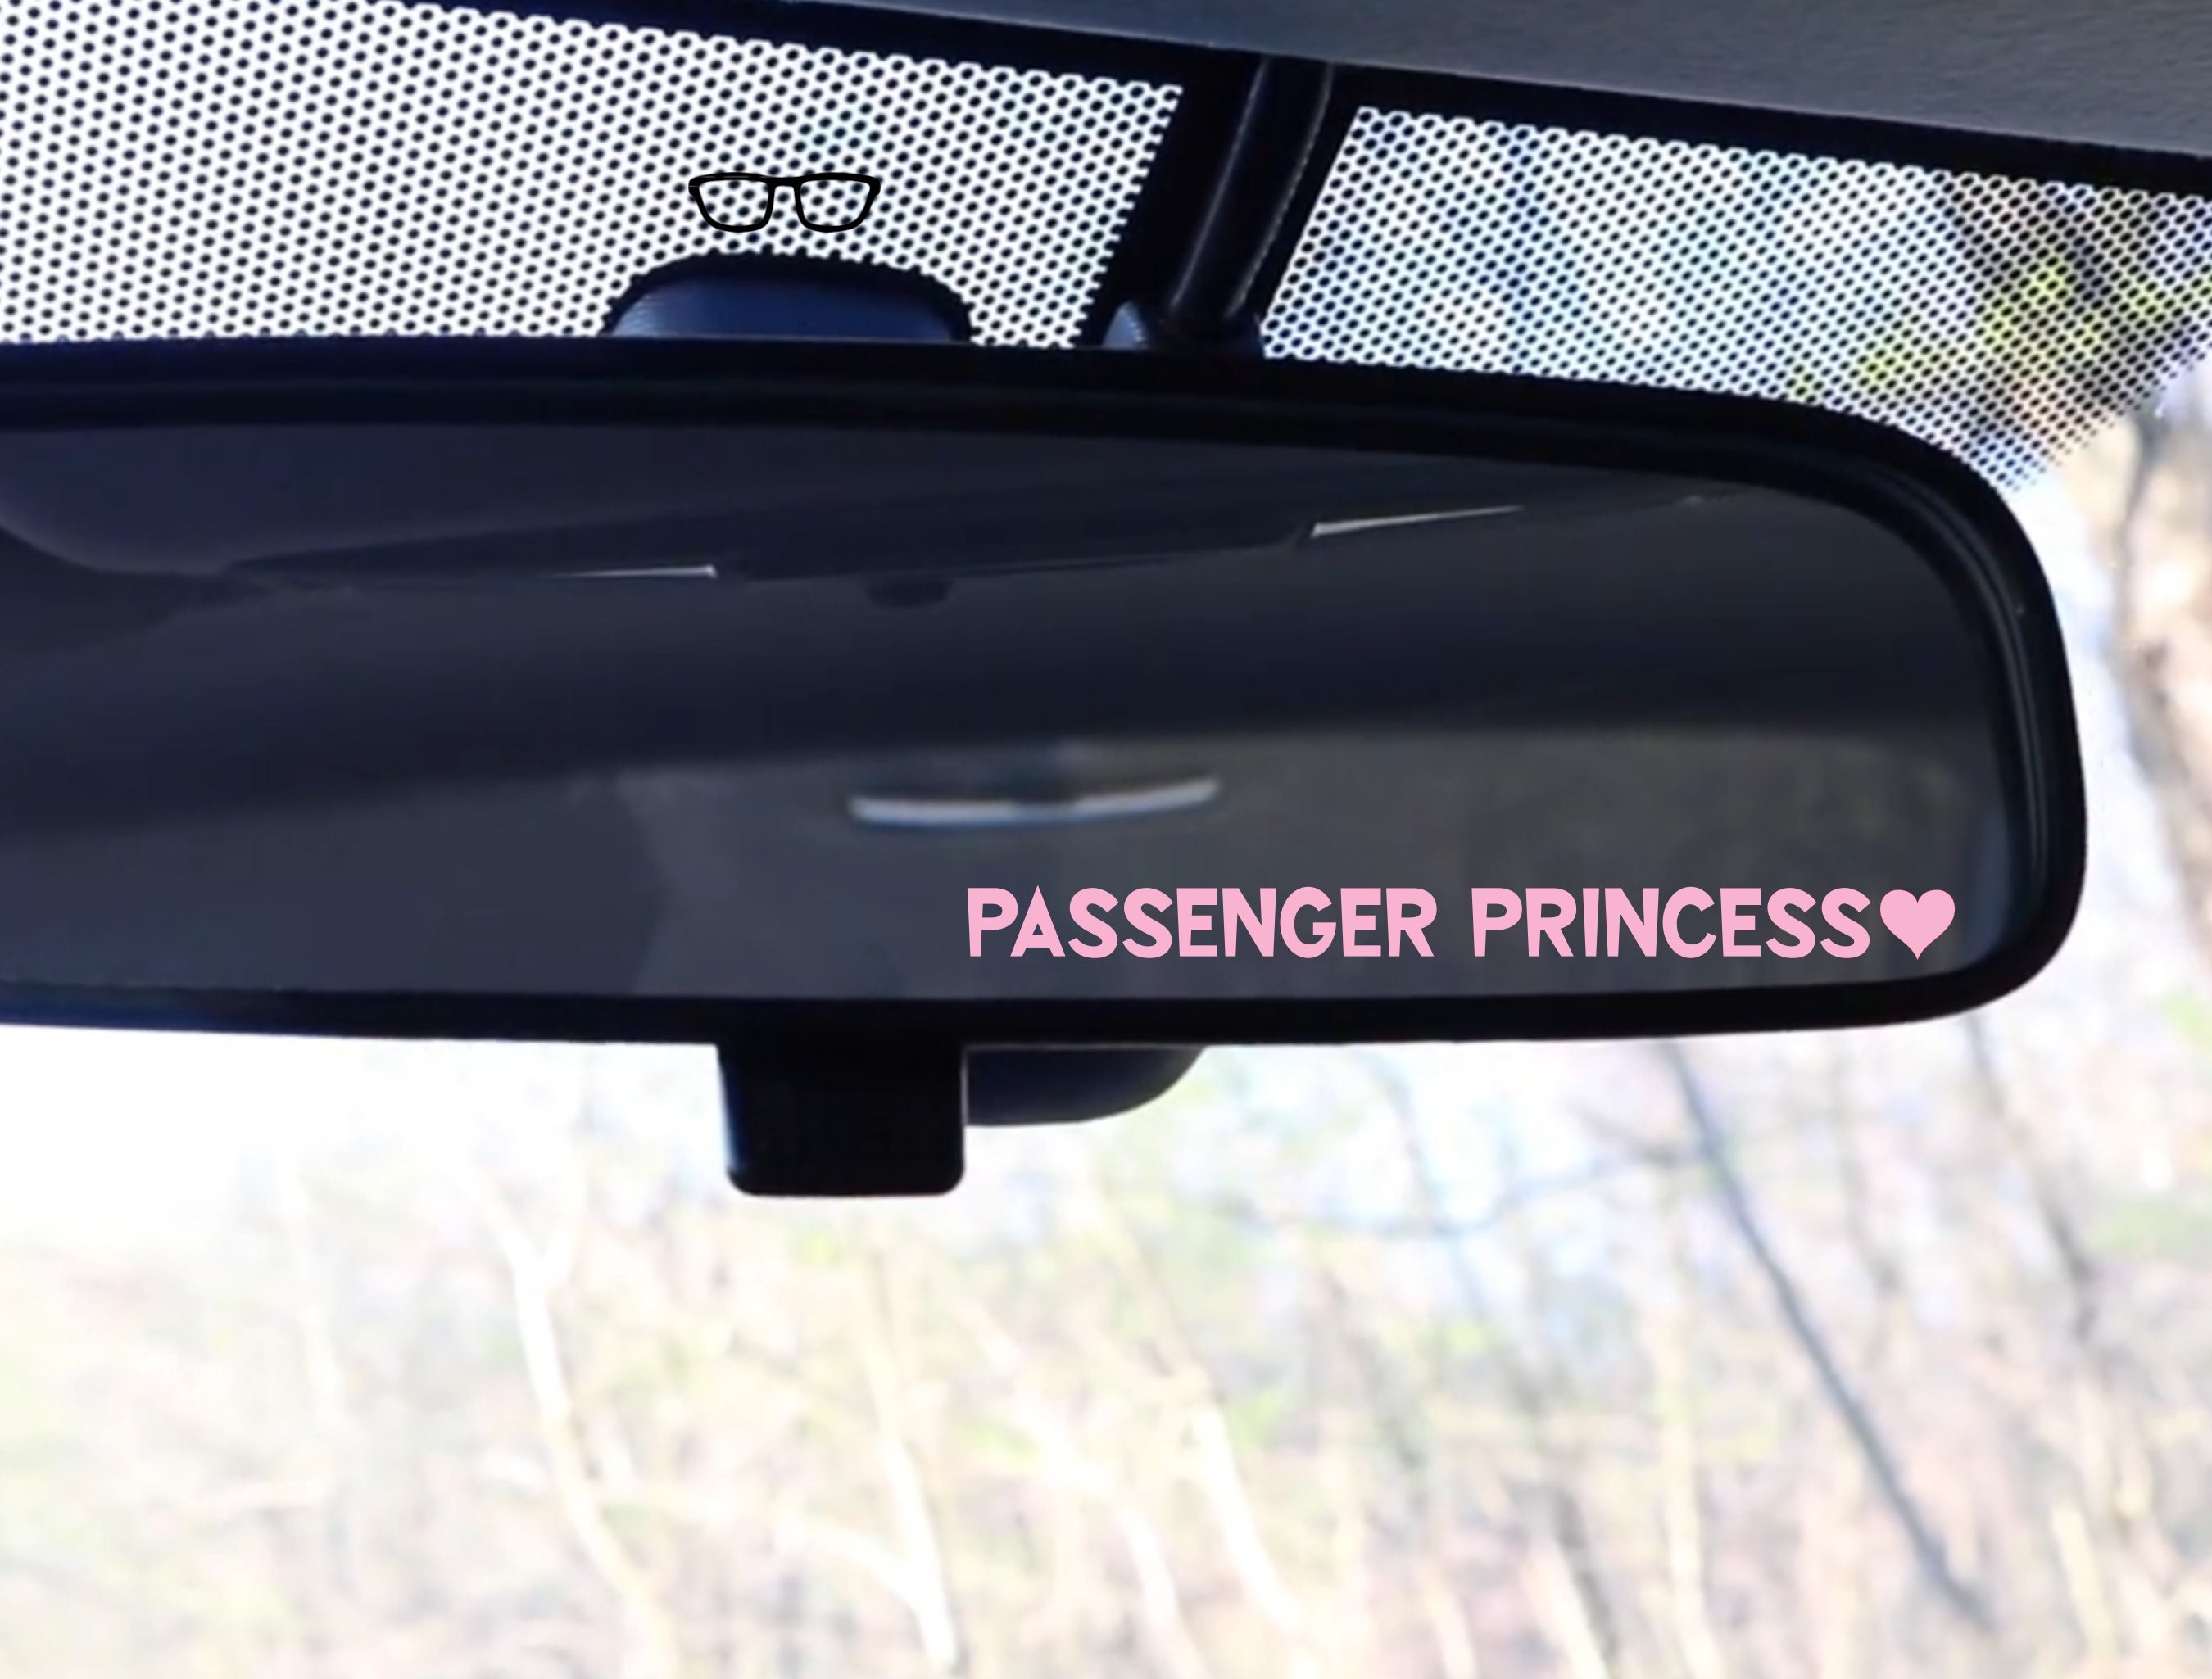 Buy Passenger Princess, Car Mirror Decal, Car Visor Sticker